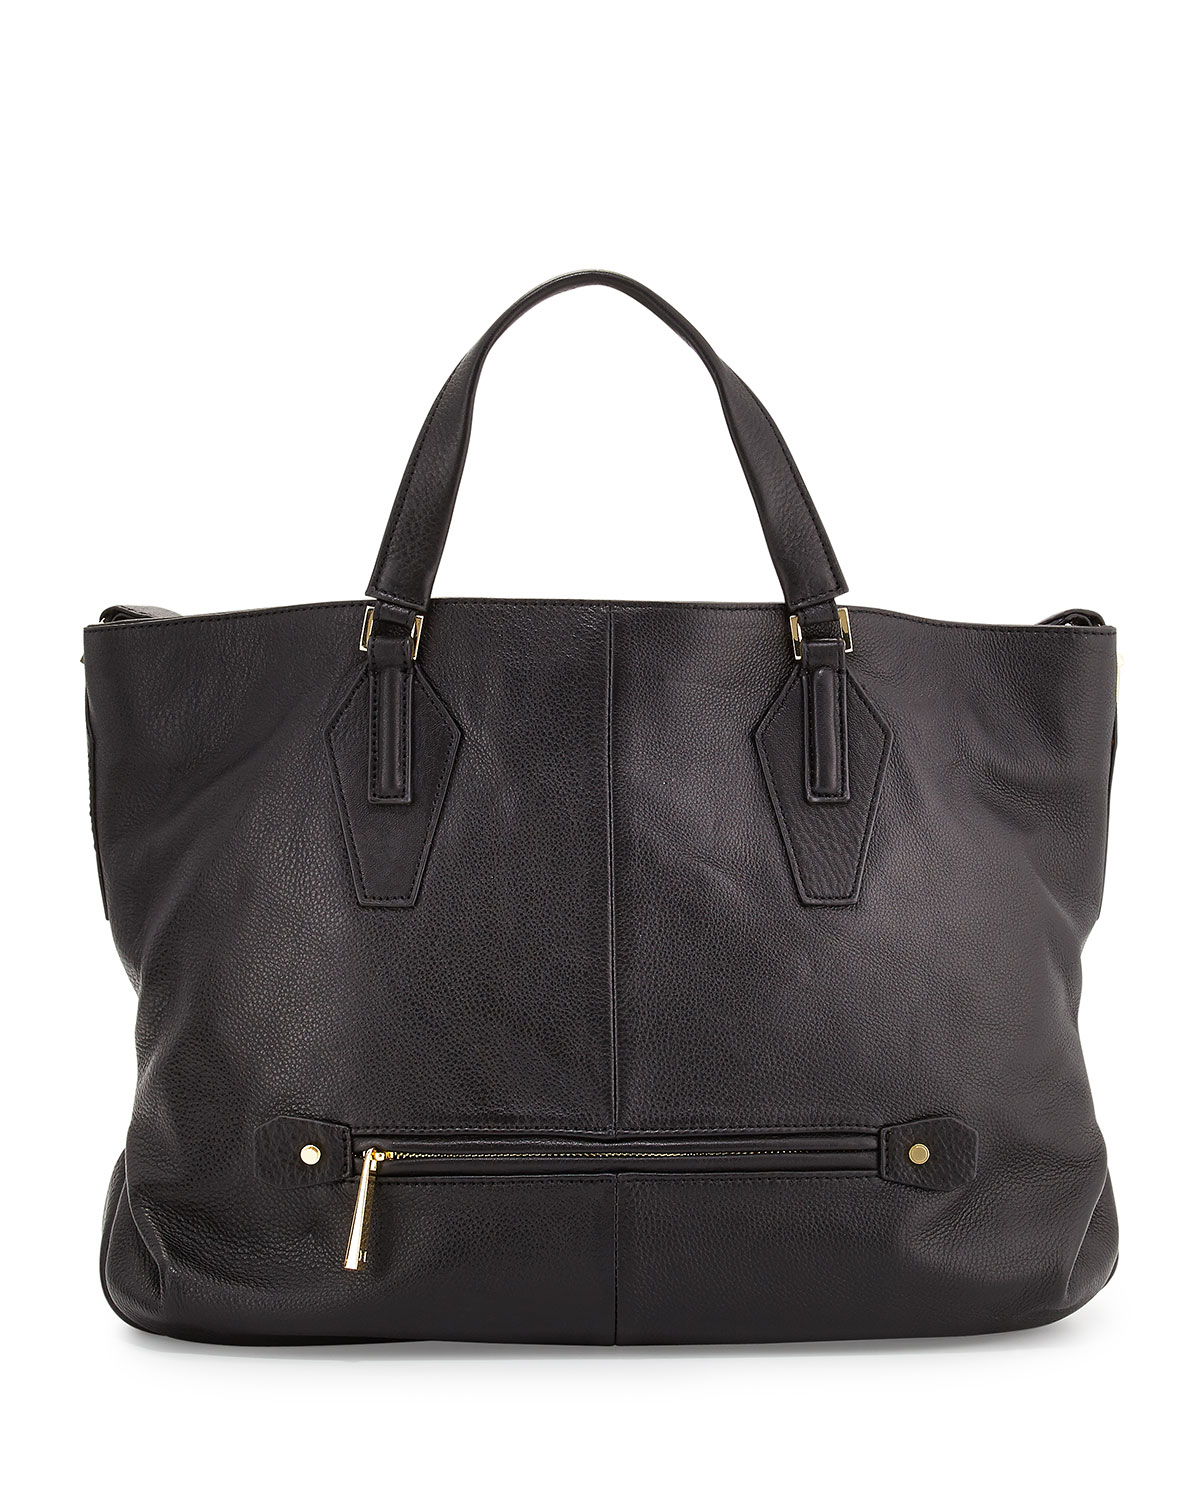 Convertible Hobo Bag. HOBO Merrin Tote Bag For Women - Genuine Leather ...